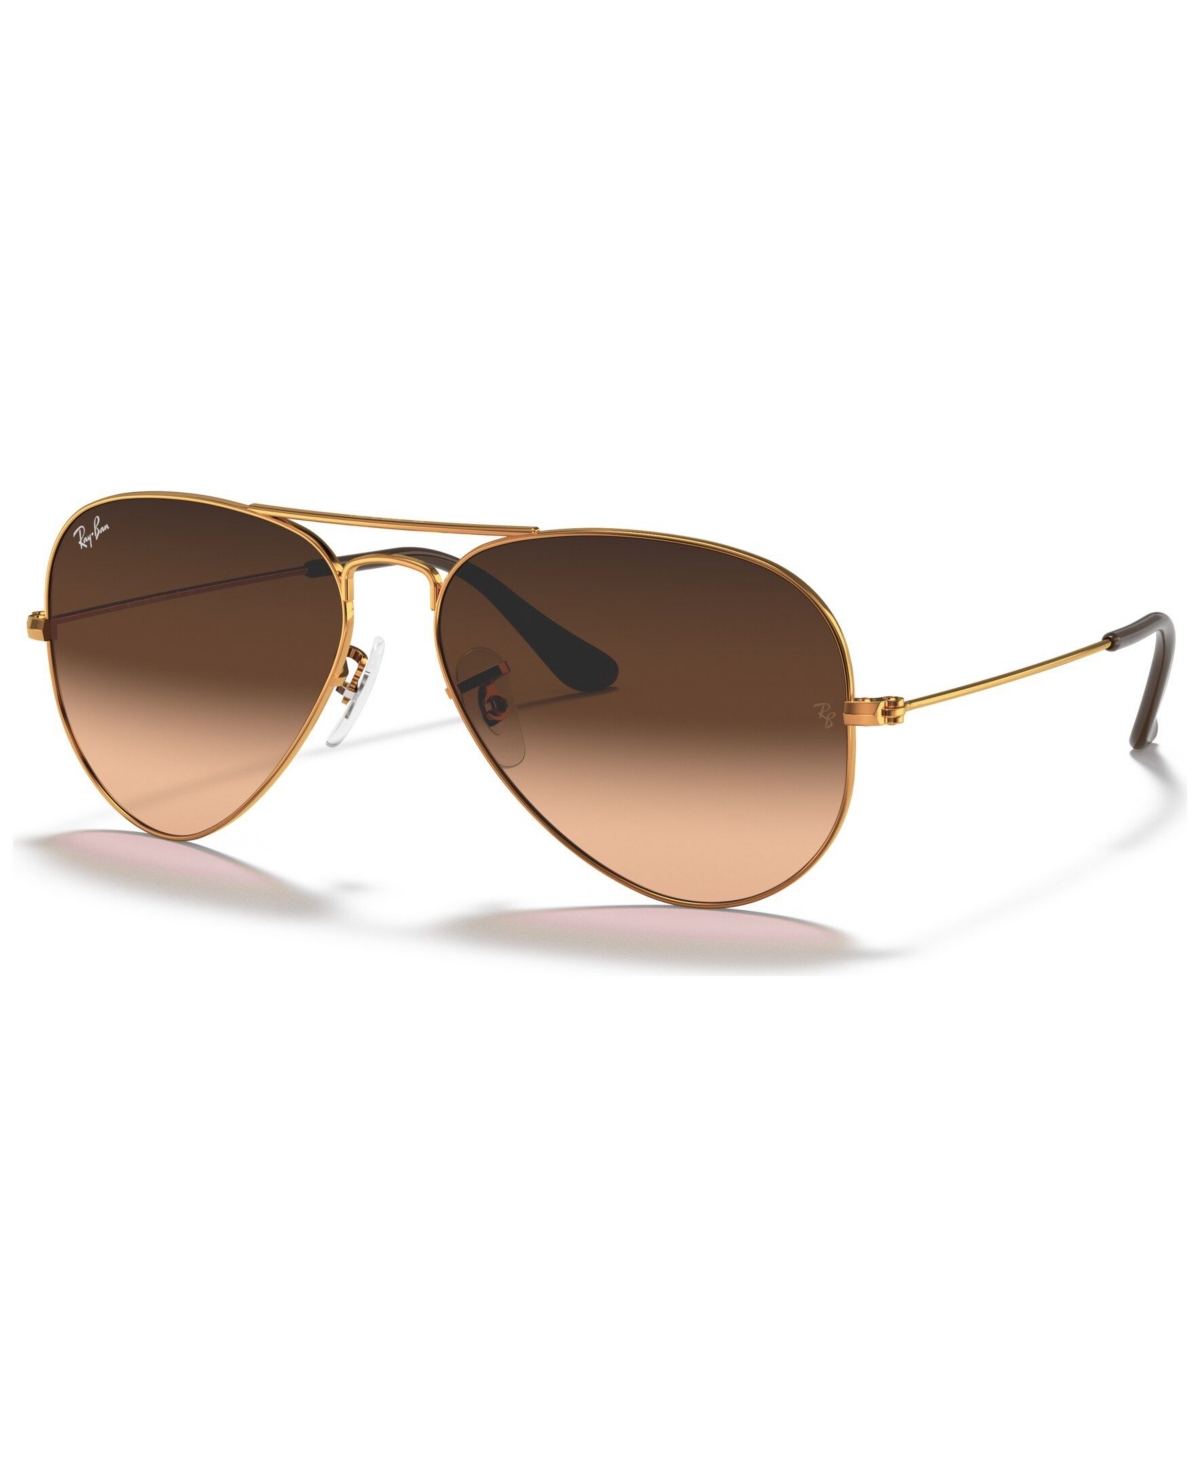 Ray Ban Unisex Sunglasses, Rb3025 Aviator Gradient In Bronze Shiny,pink Gradient